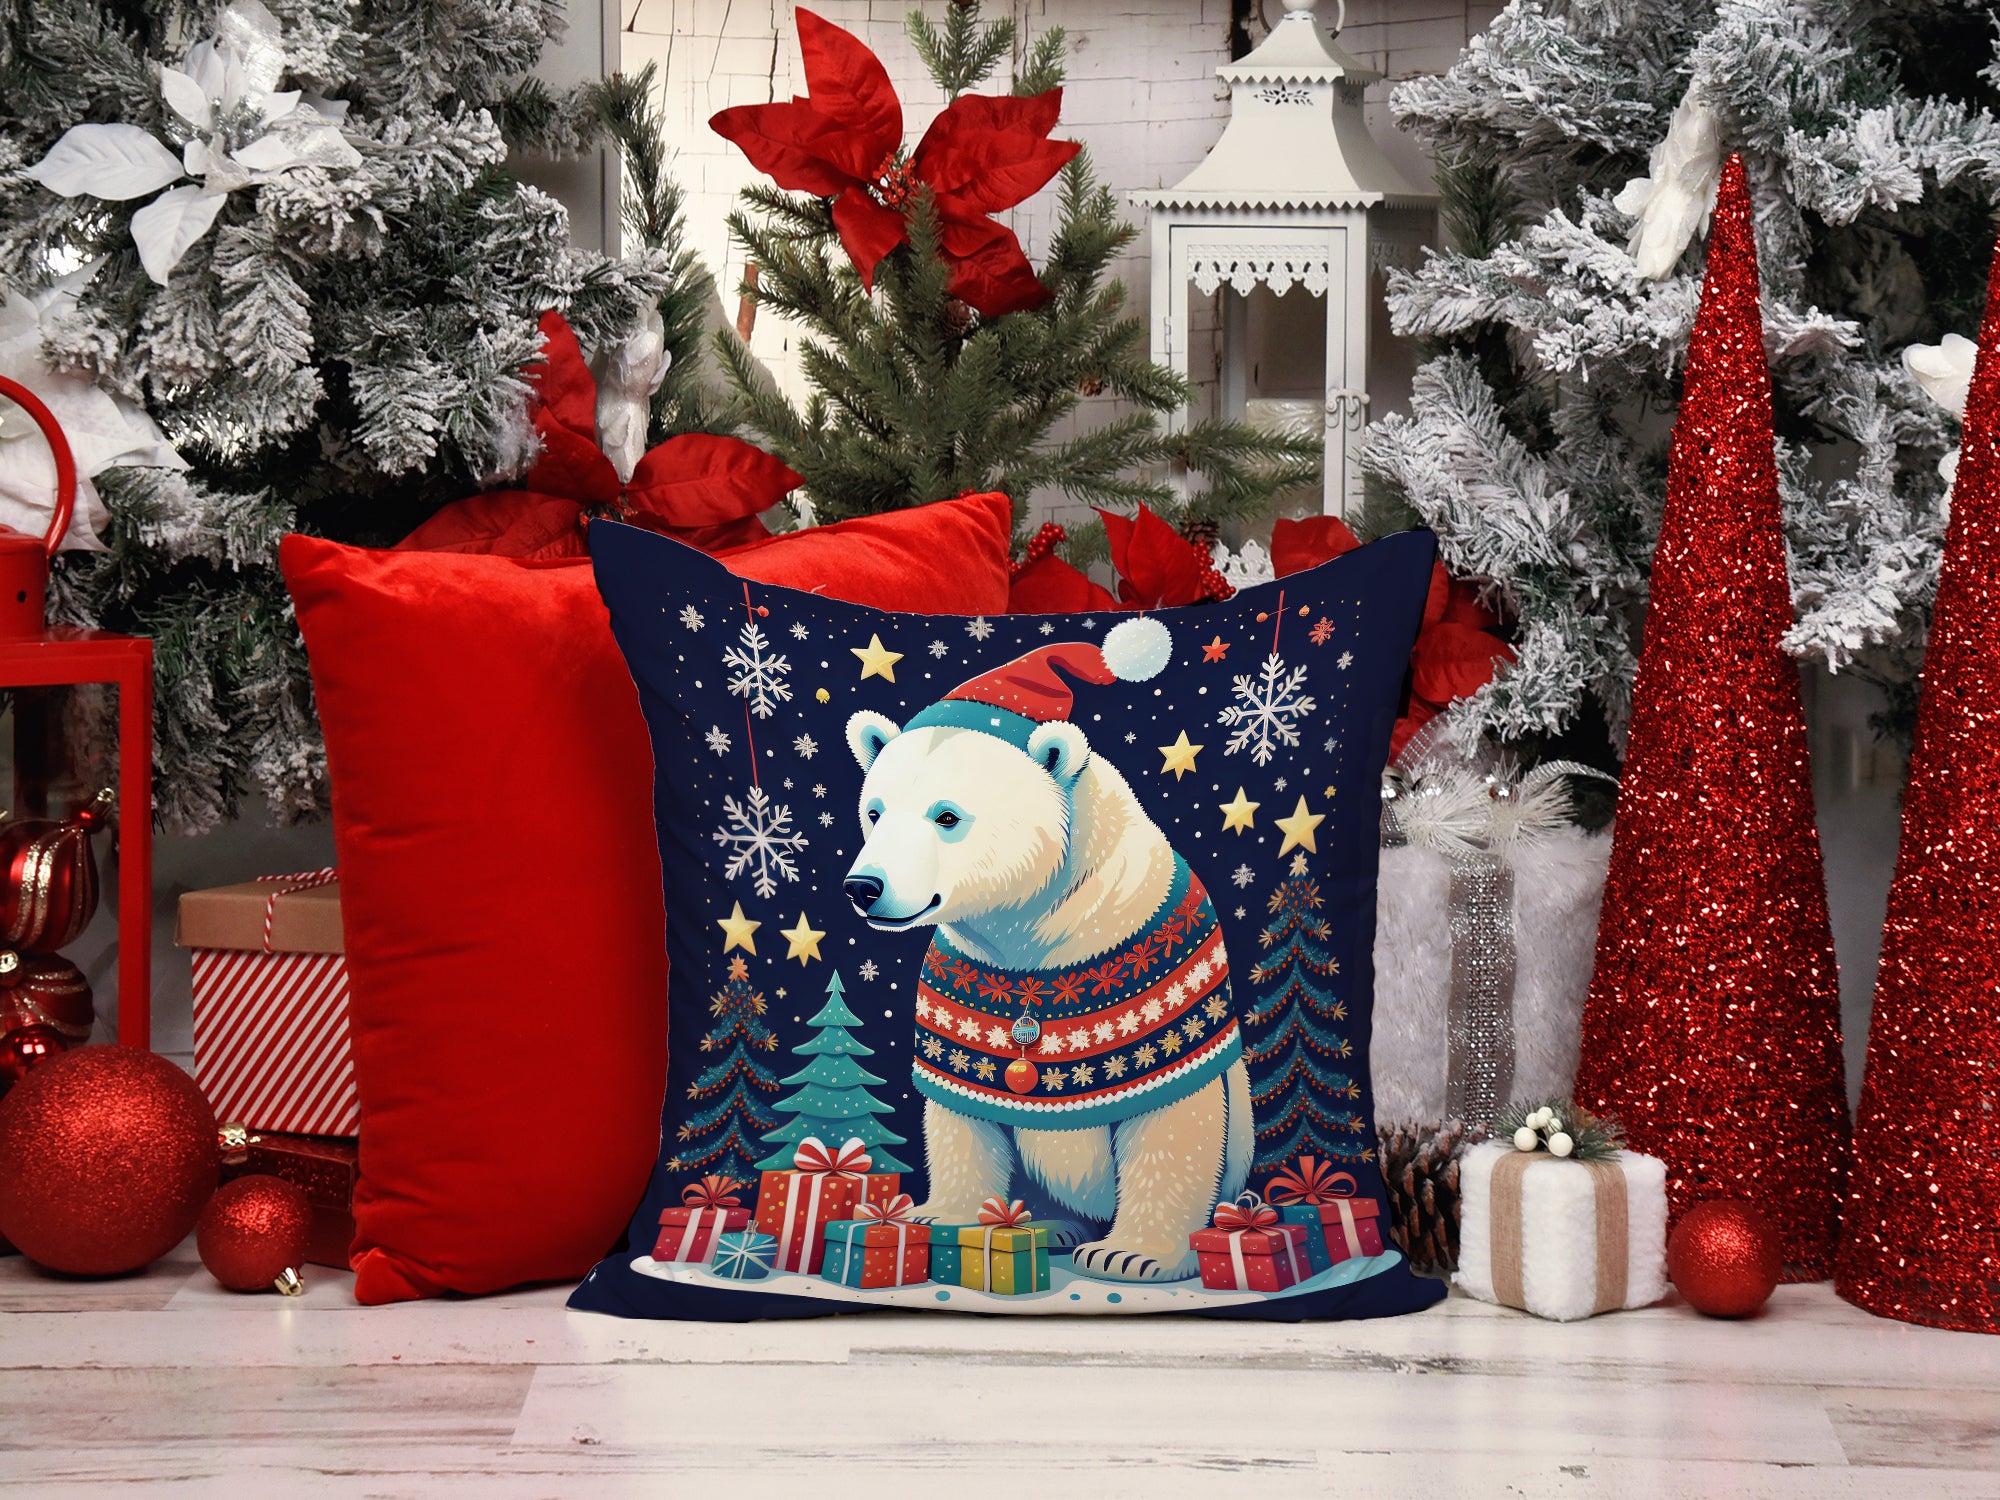 Buy this Polar Bear Christmas Fabric Decorative Pillow